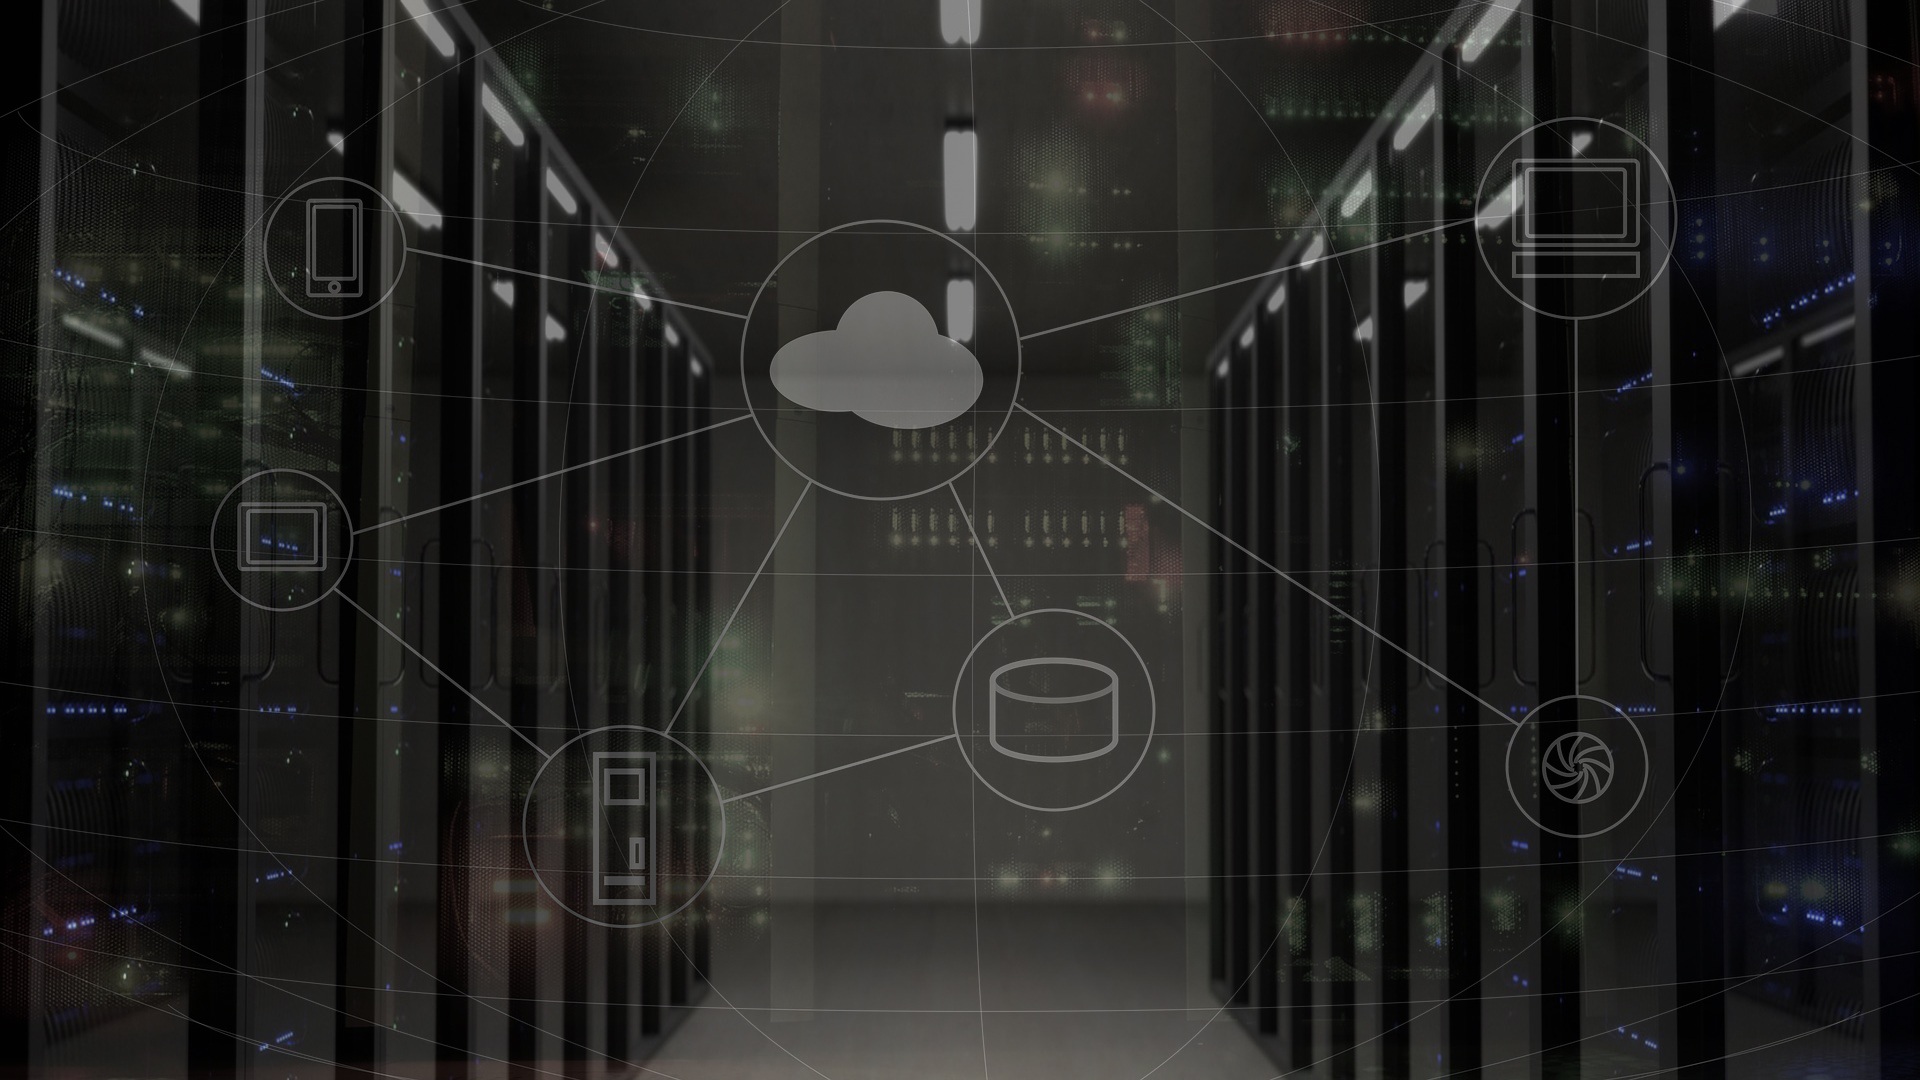 servers with cloud computing icons overlaid